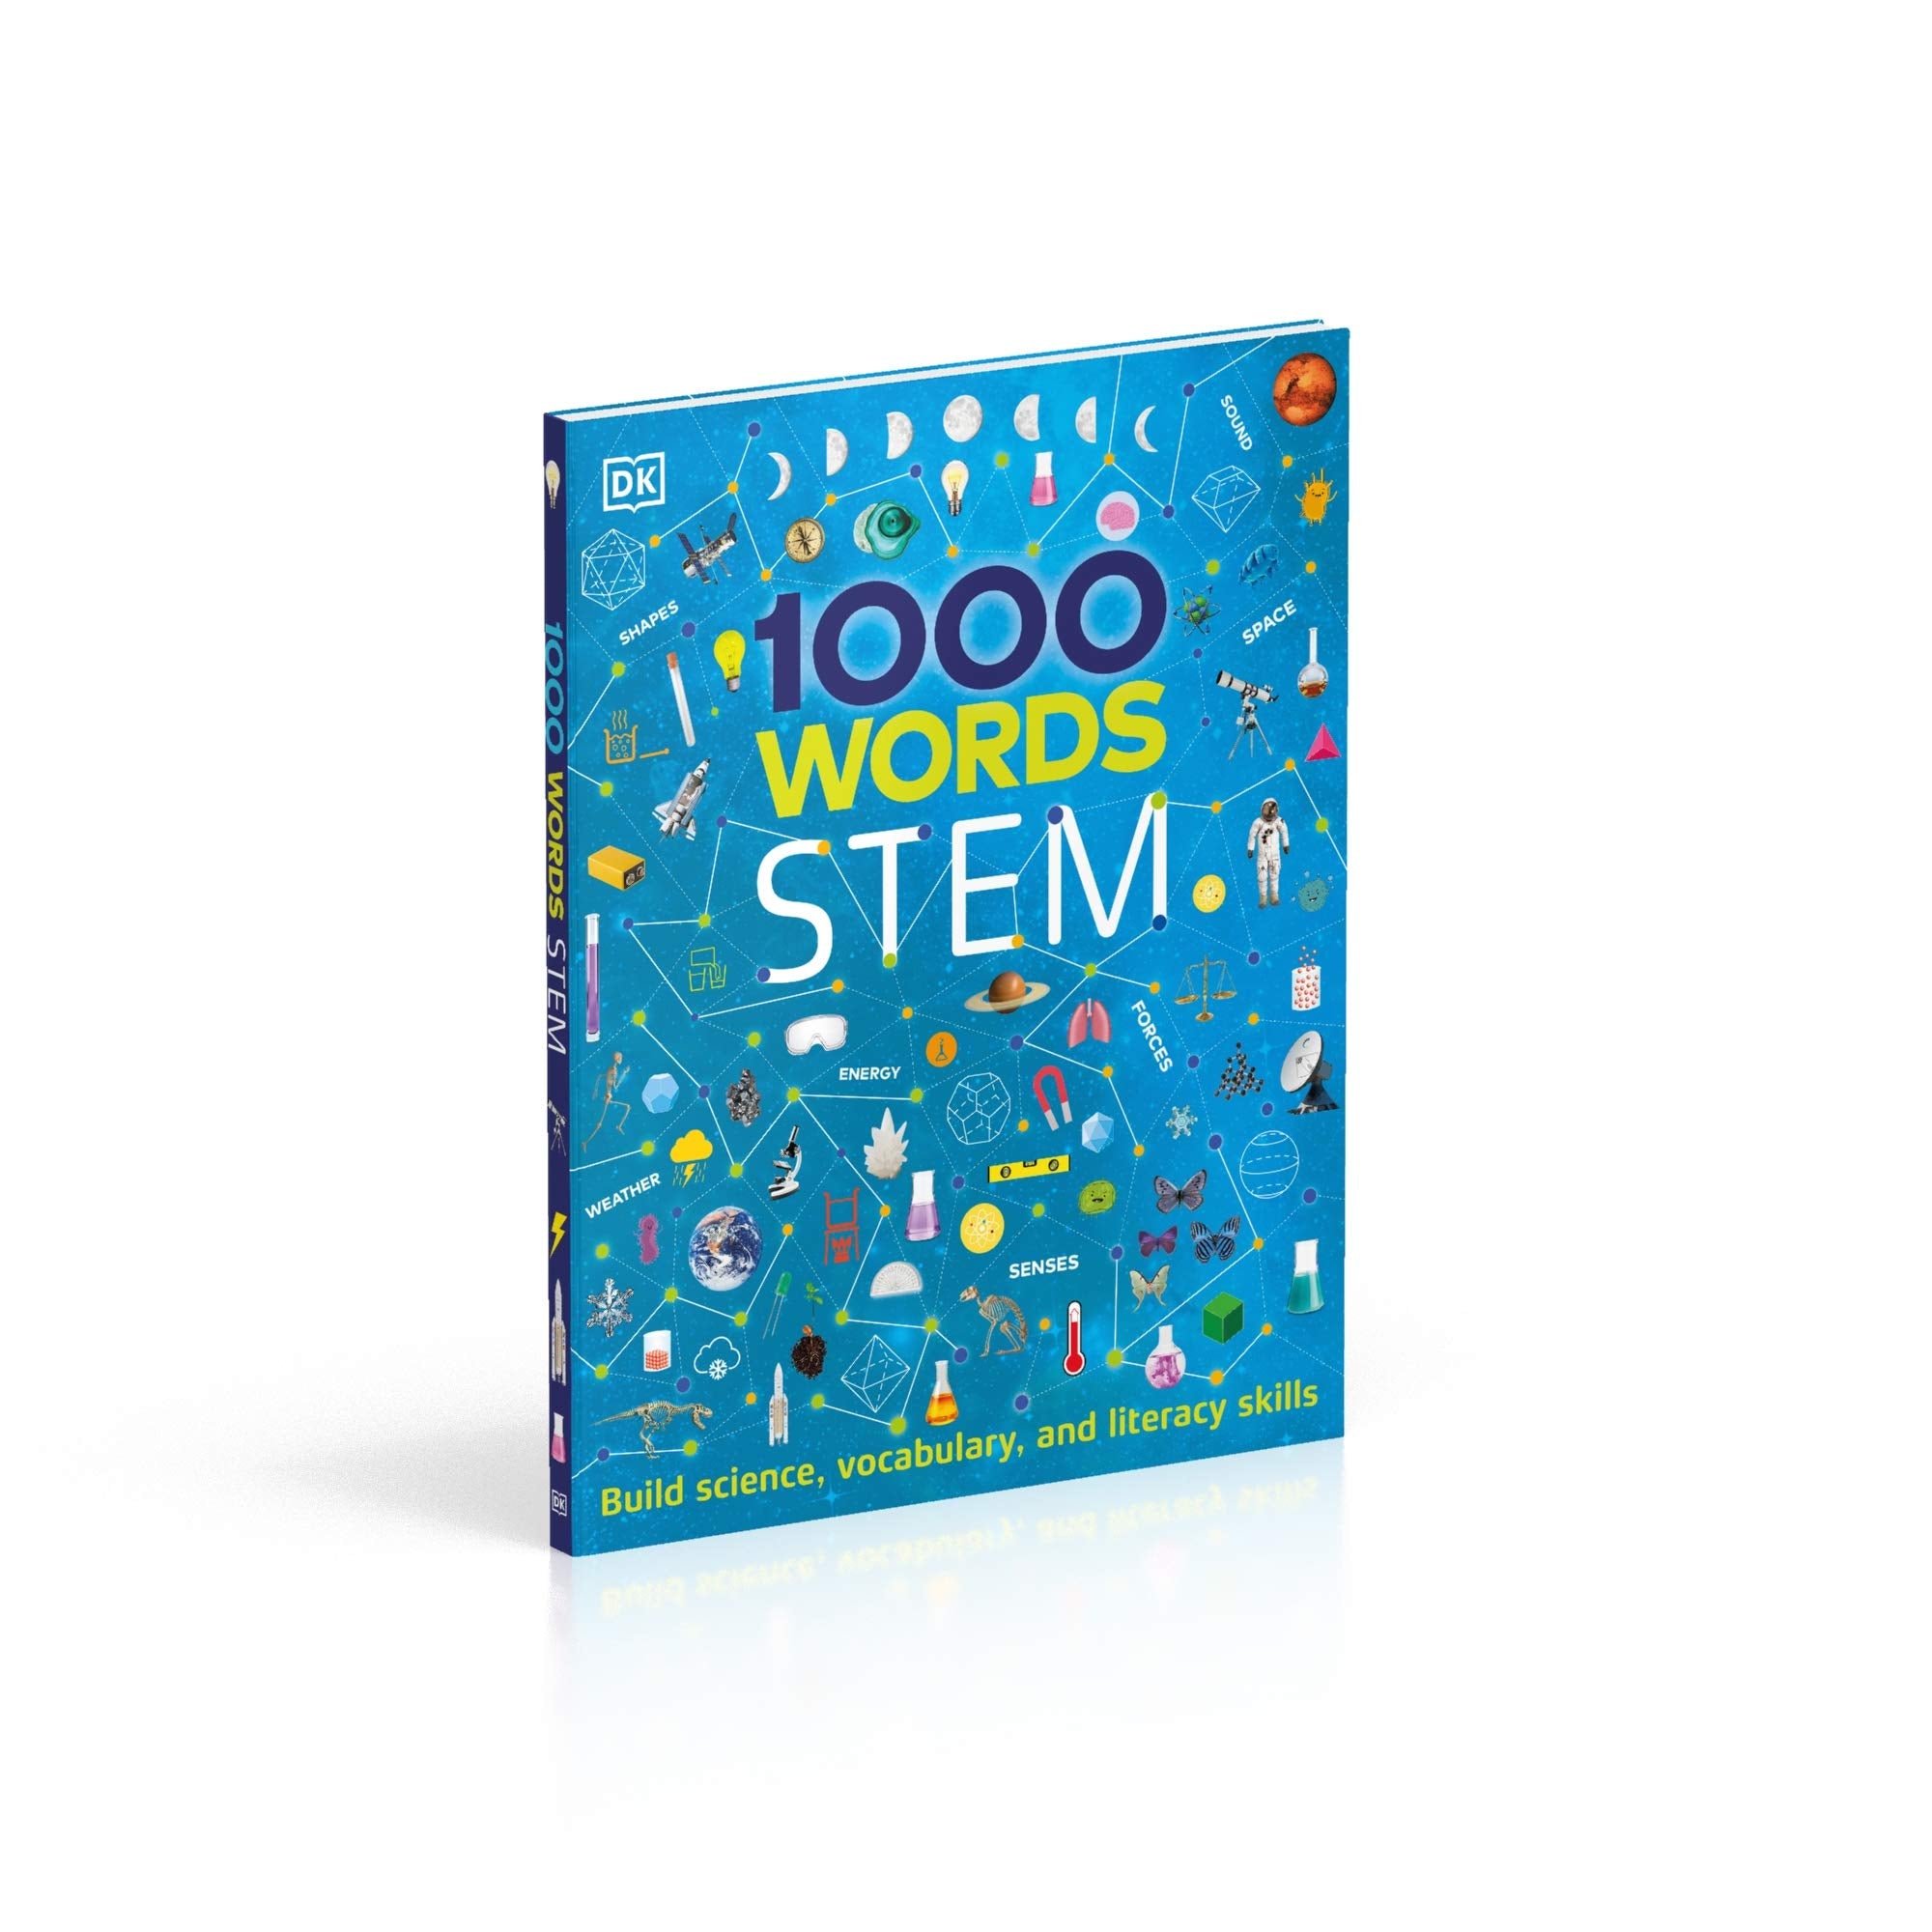 1000 Words: STEM